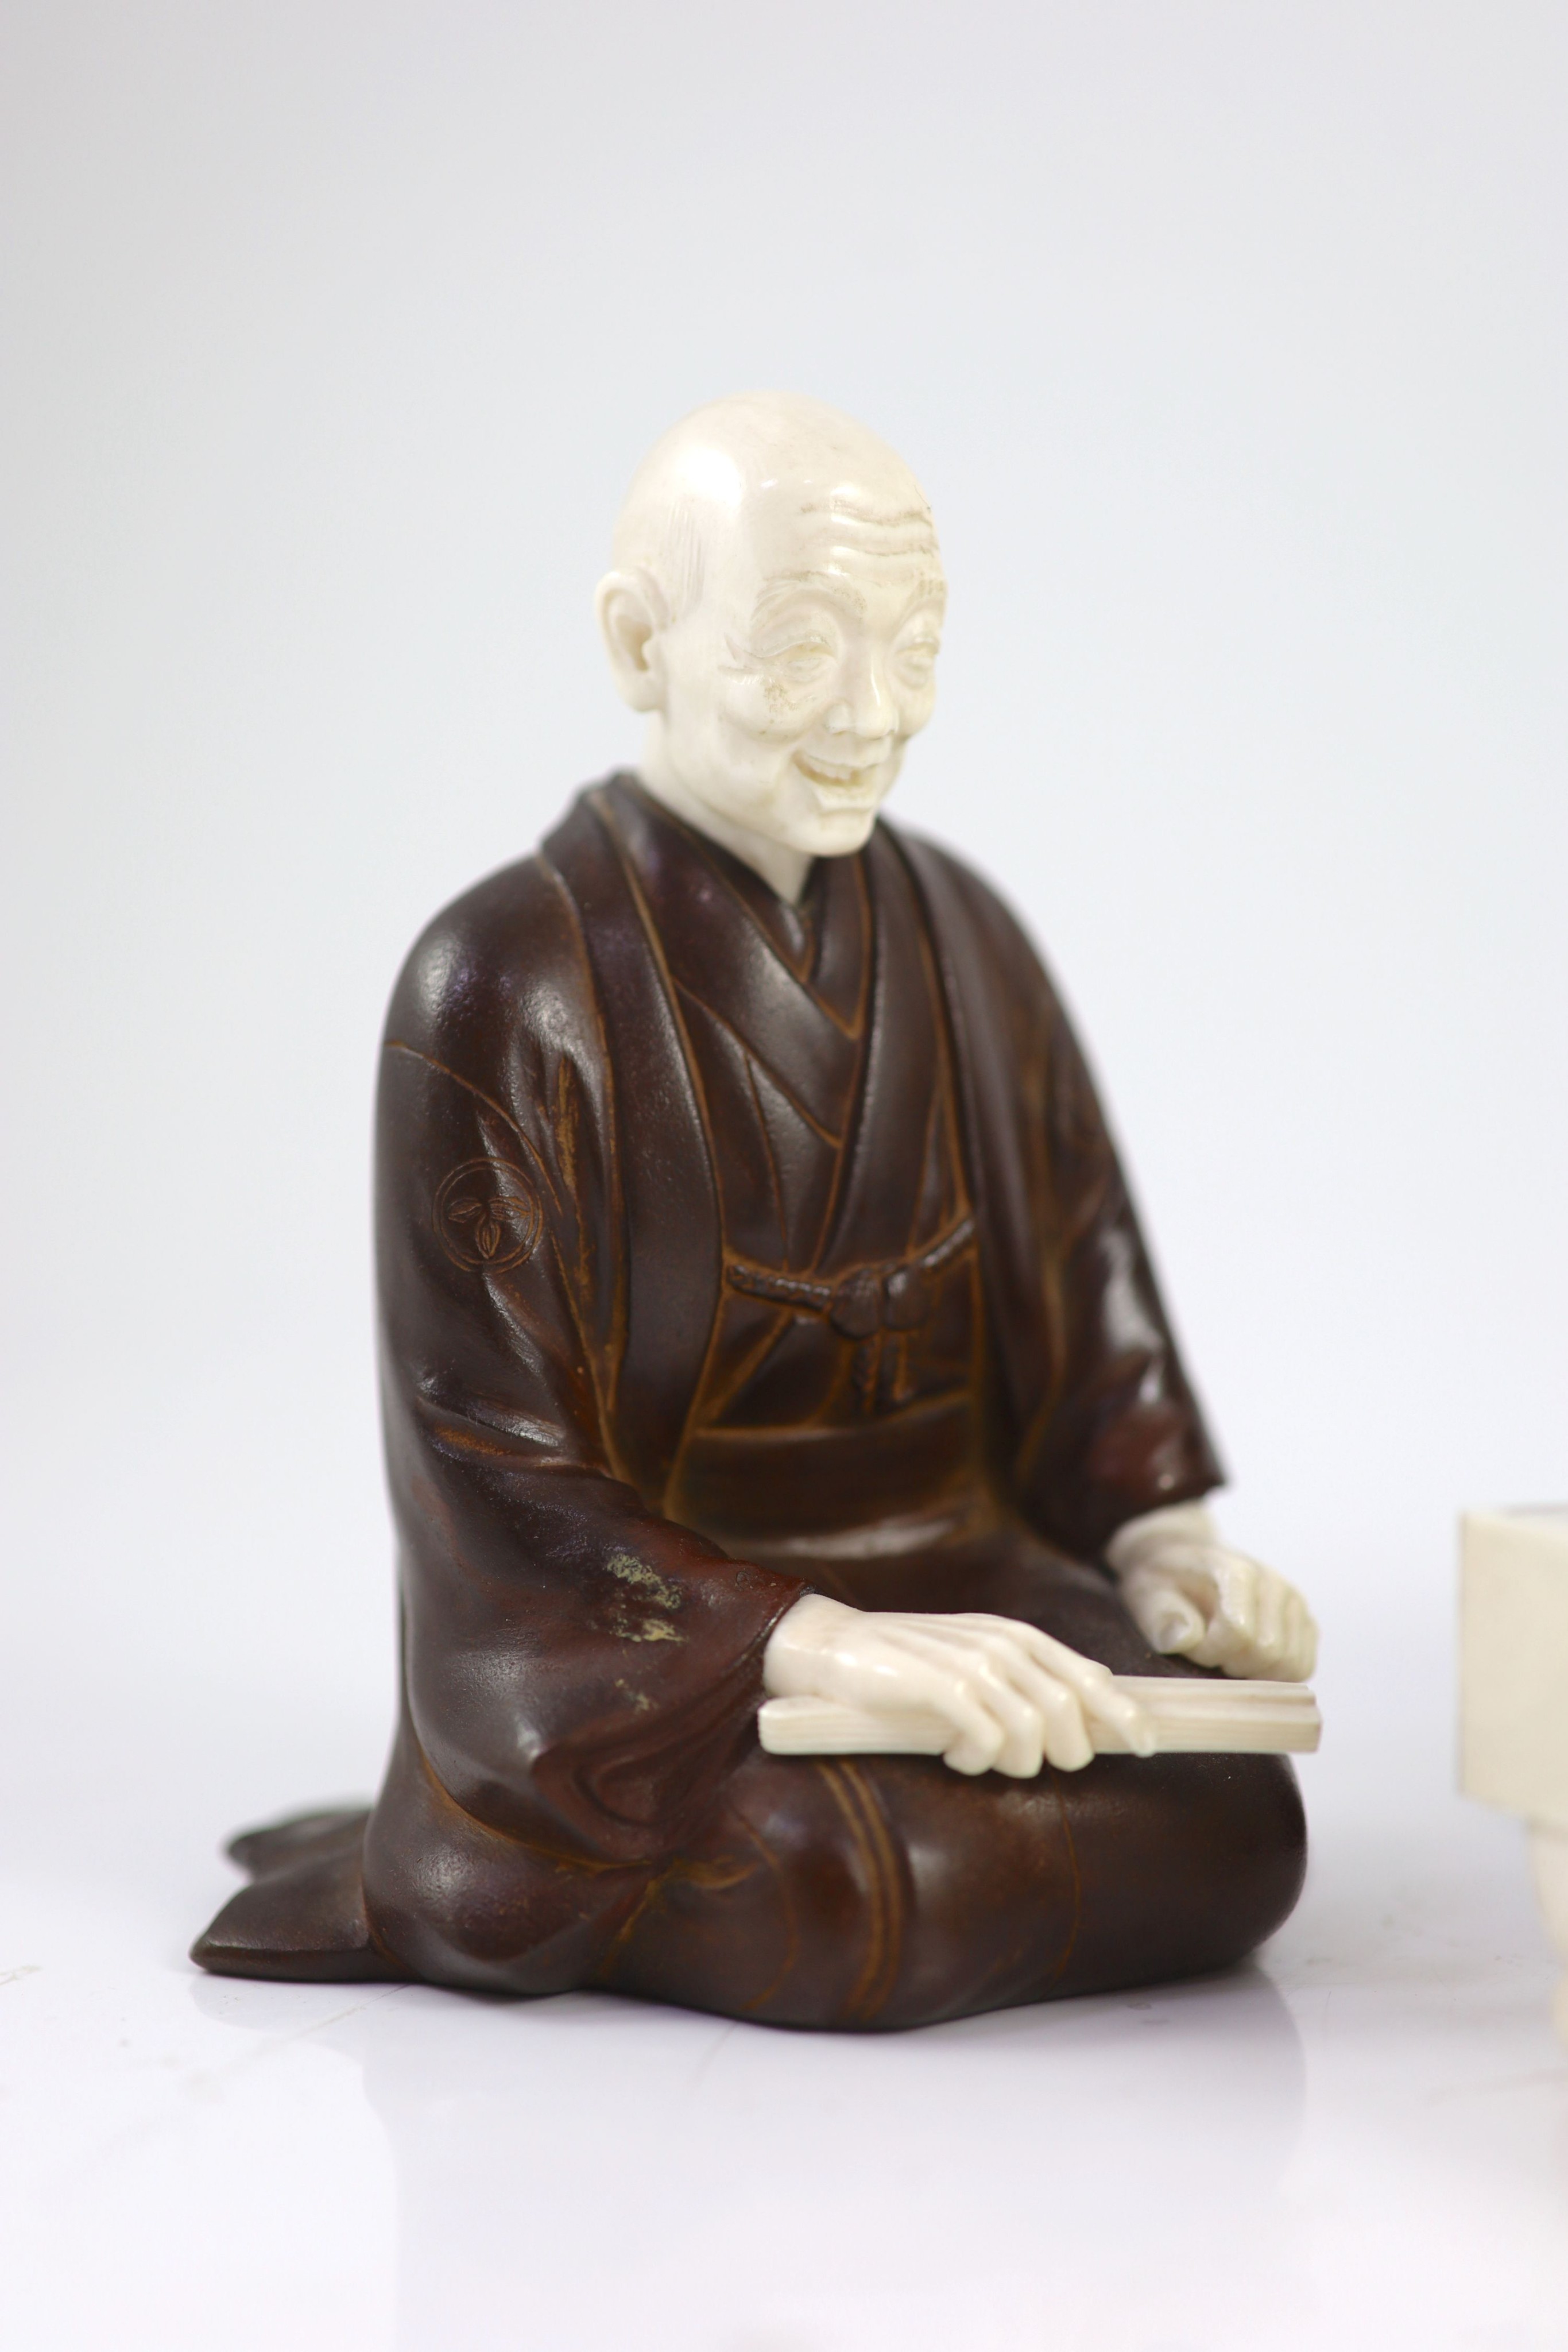 A set of three Japanese bronze and ivory okimono of ‘Go’ players, Meiji period,